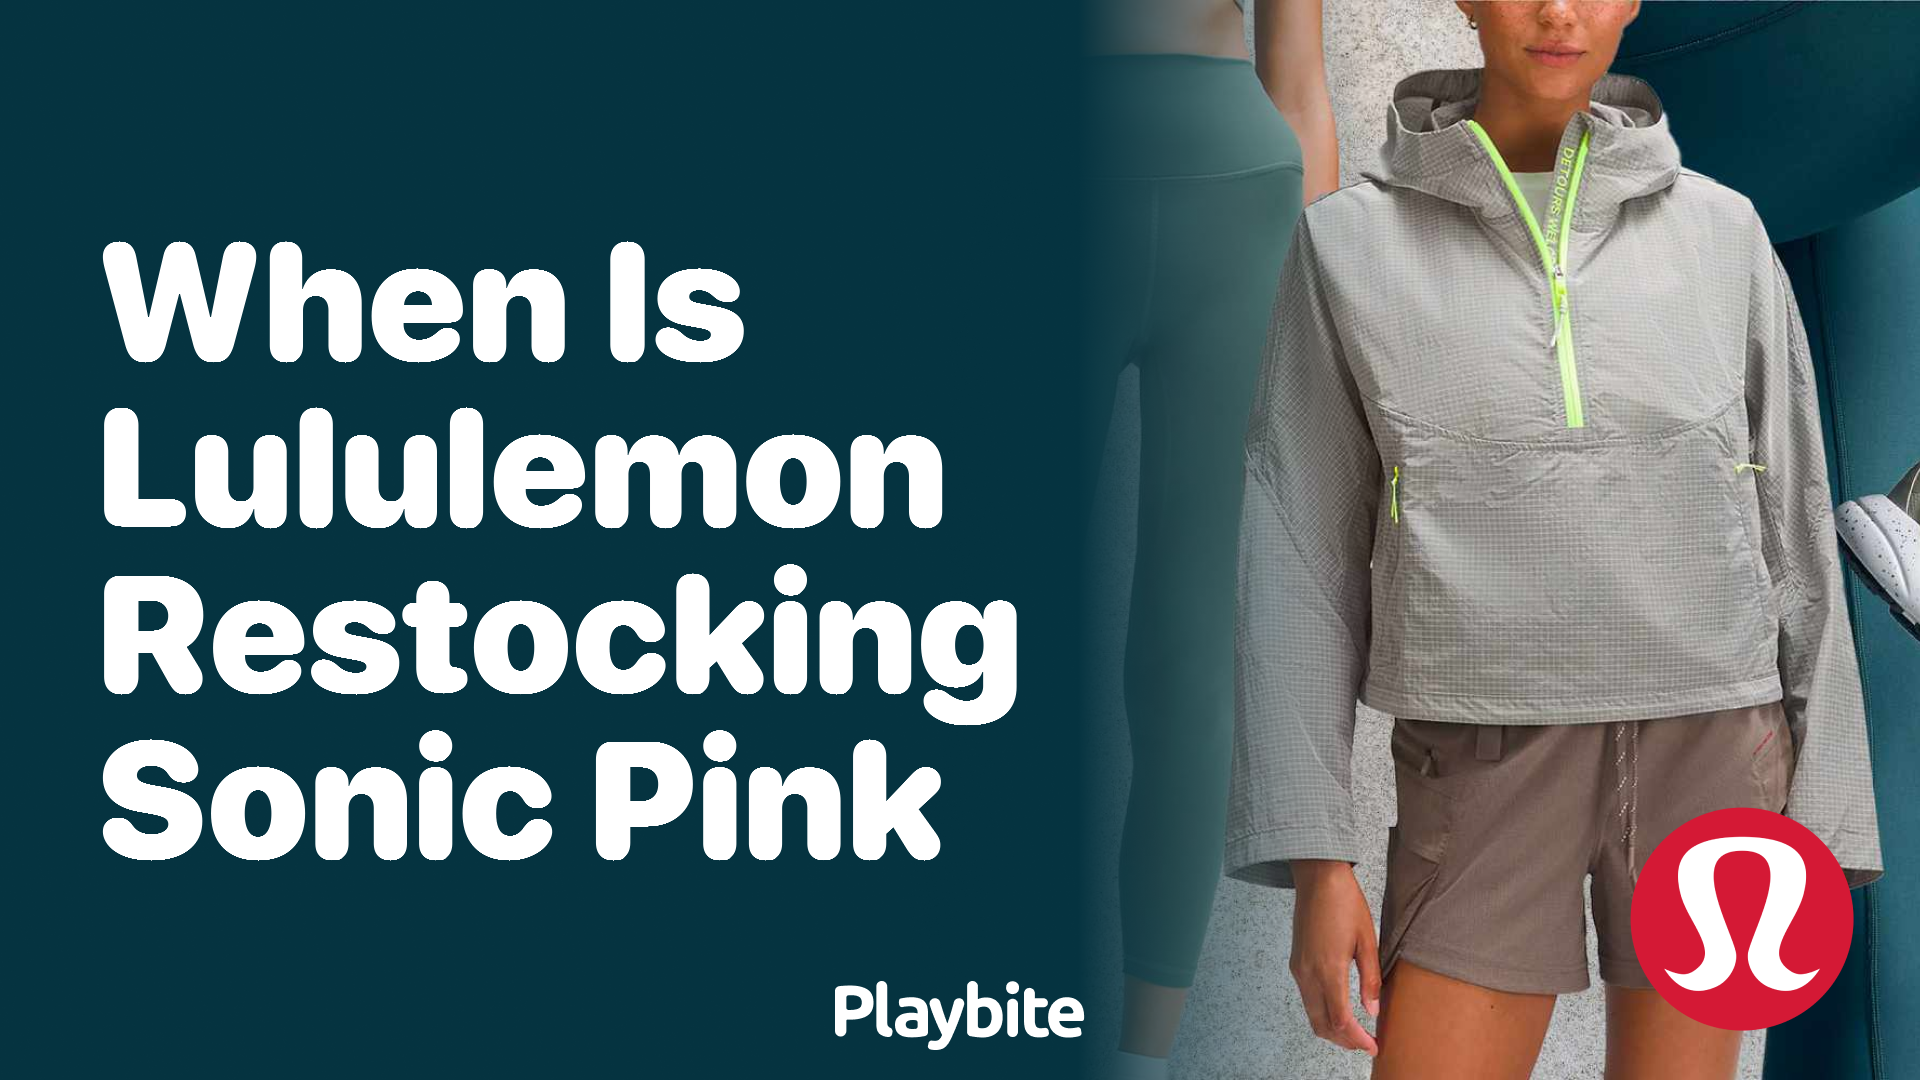 When Is Lululemon Restocking Sonic Pink? - Playbite